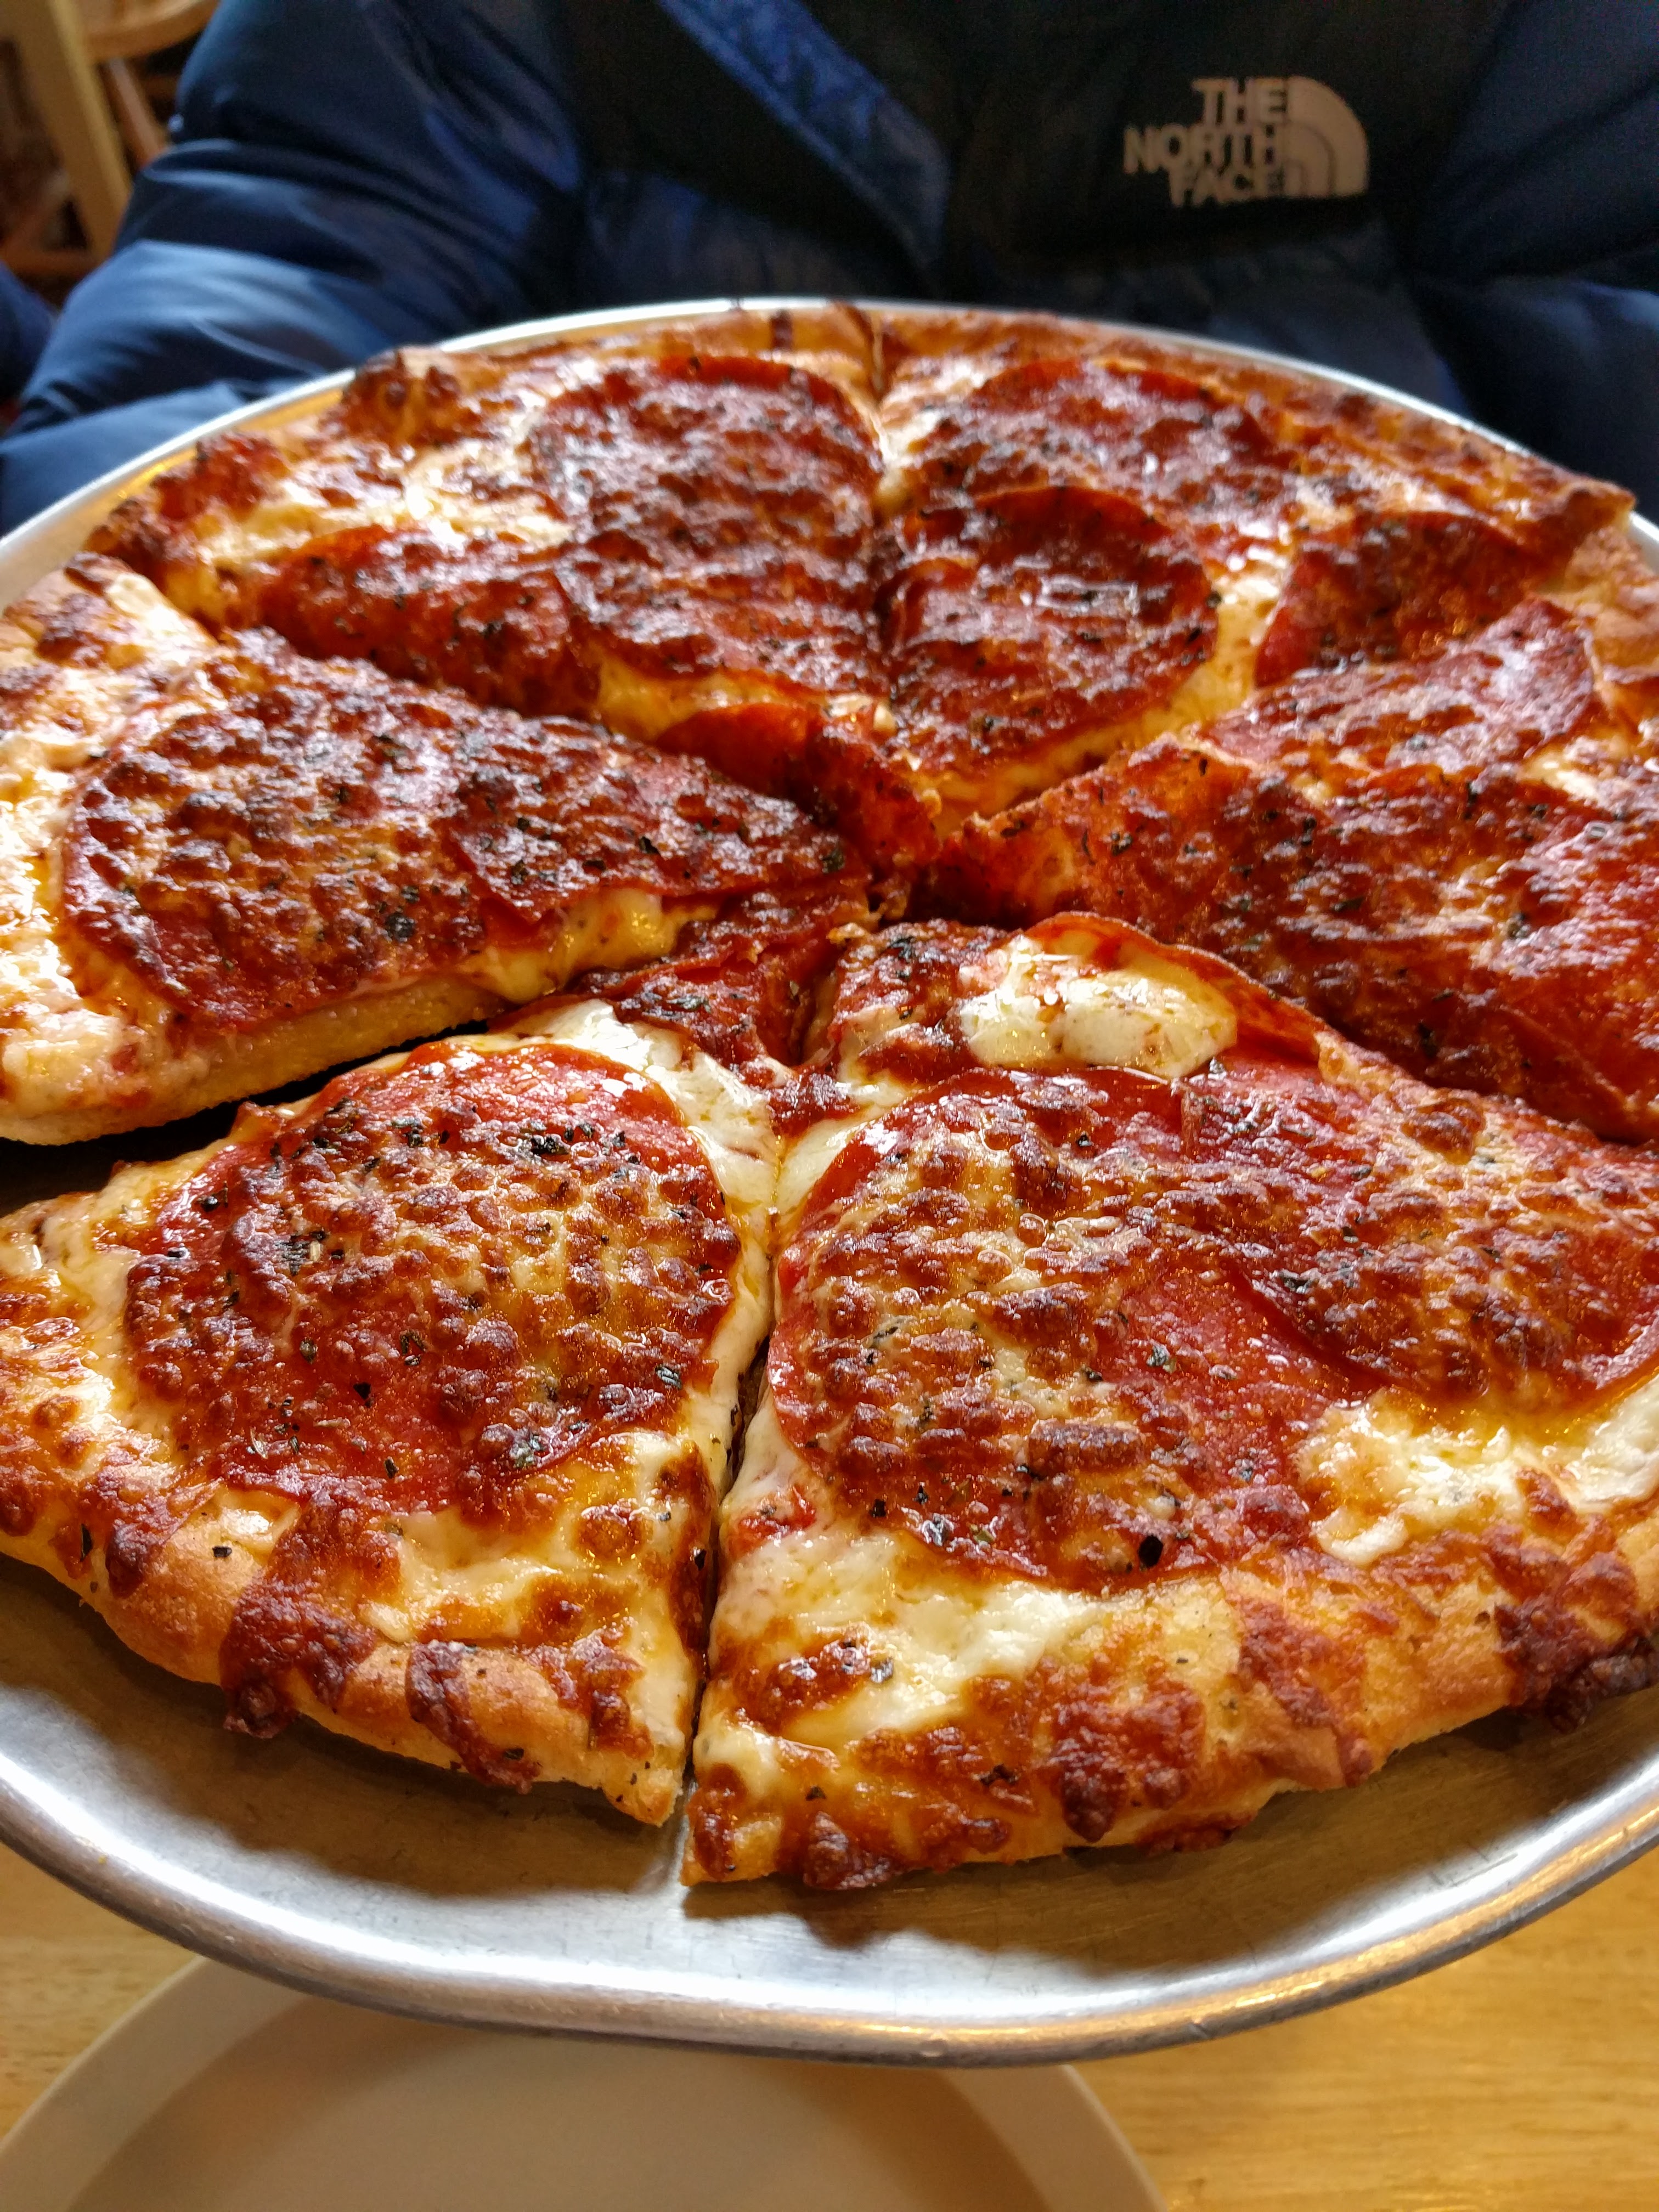 Rudloofs pepperoni pizza